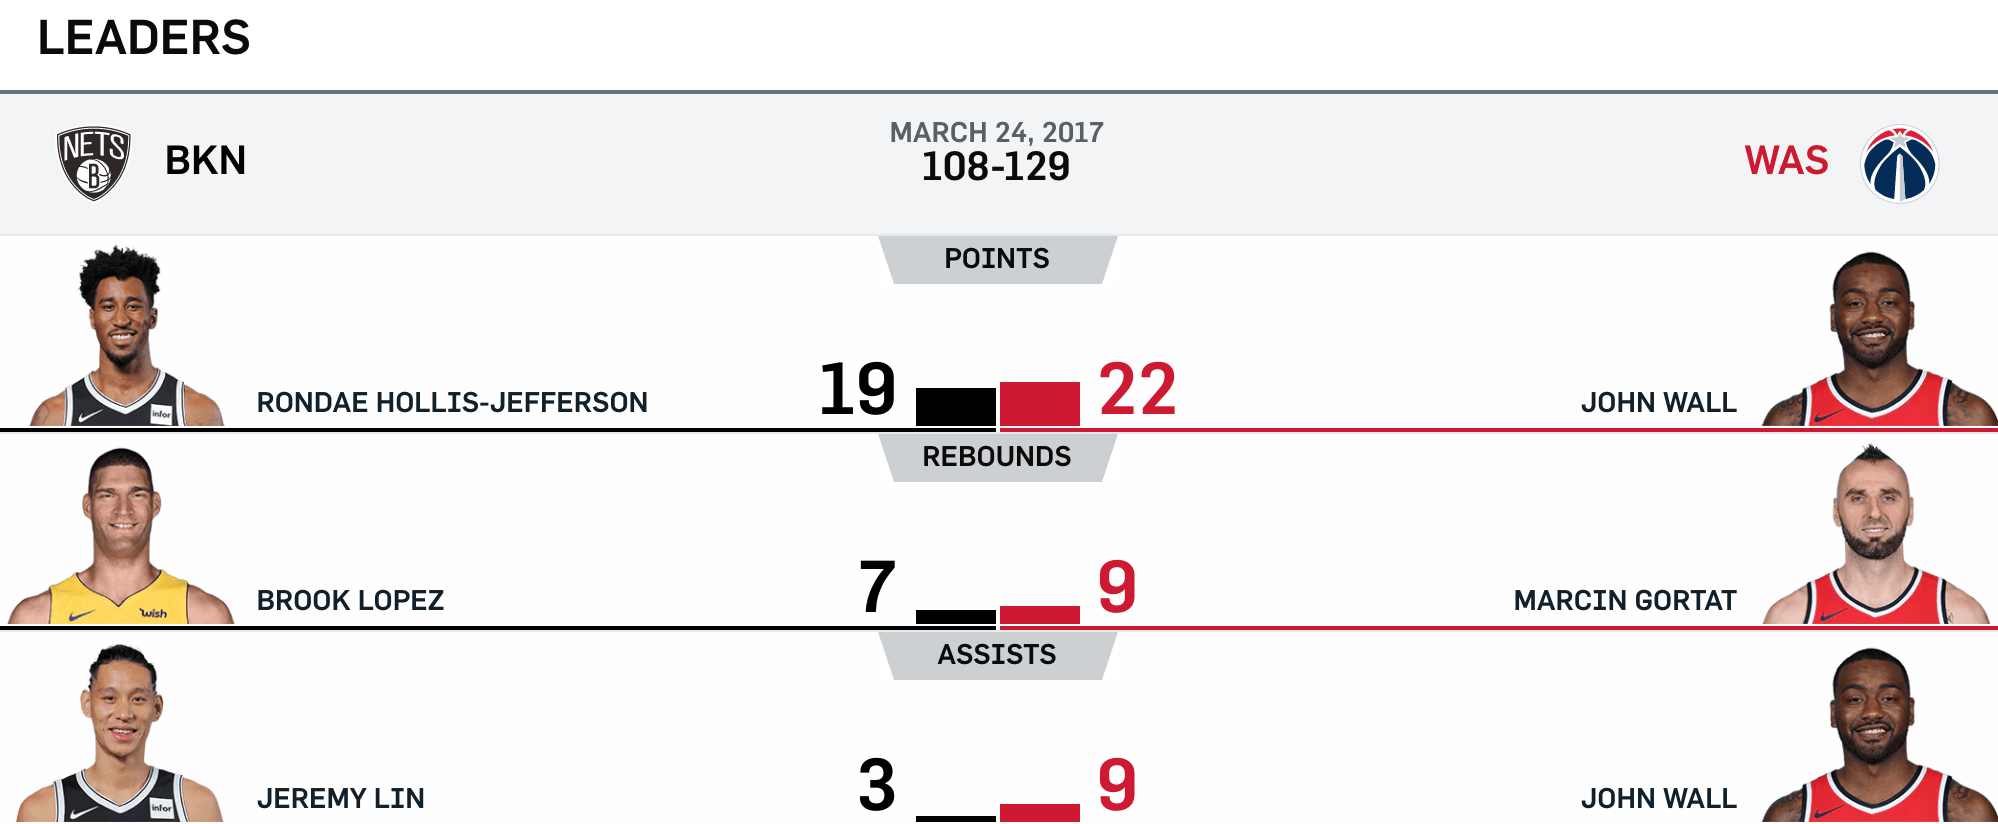 Nets vs Wizards 3-24-17 Leaders